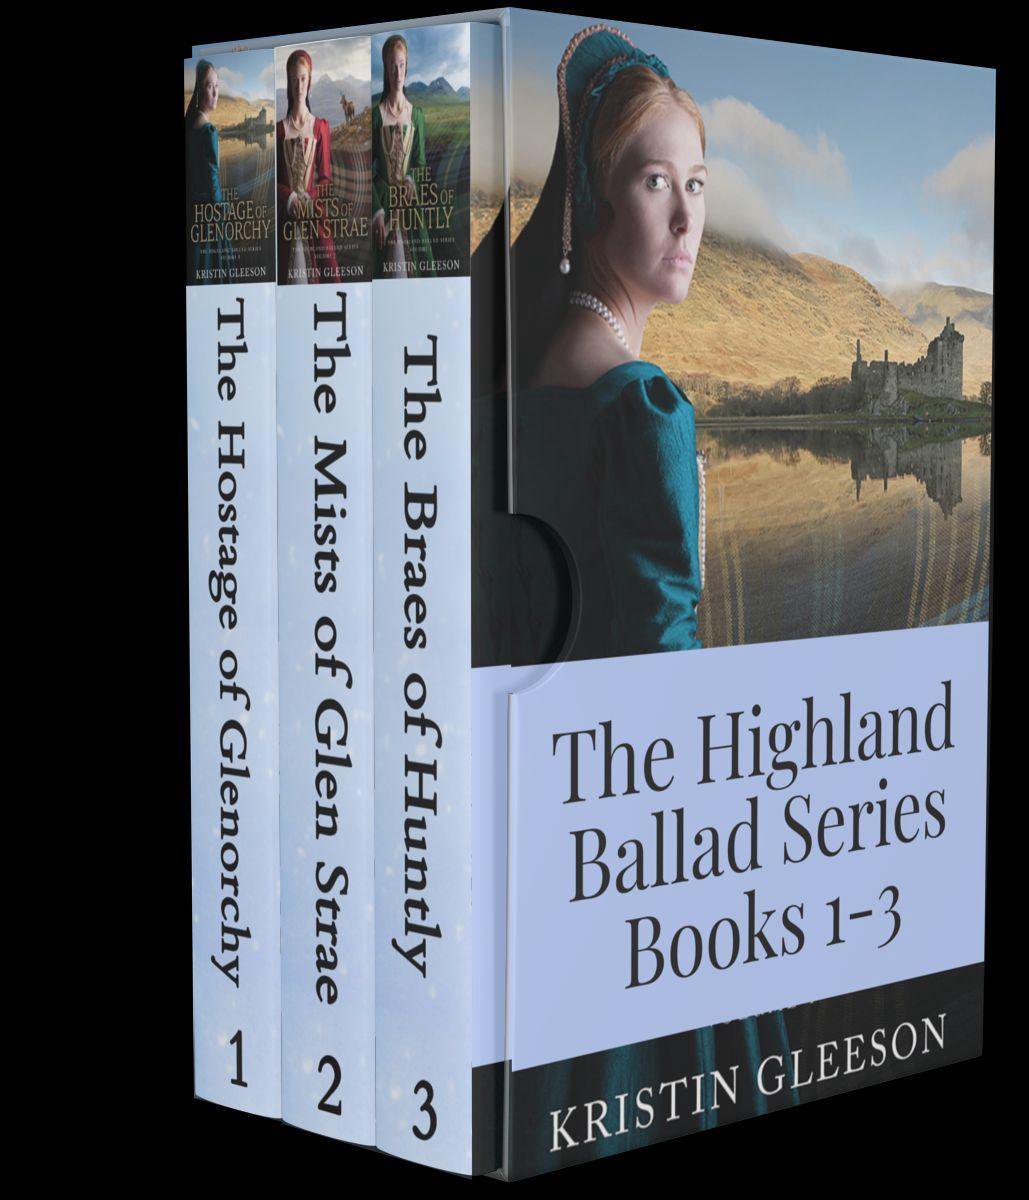 The Highland Ballad Series 1-3 - Kristin Gleeson